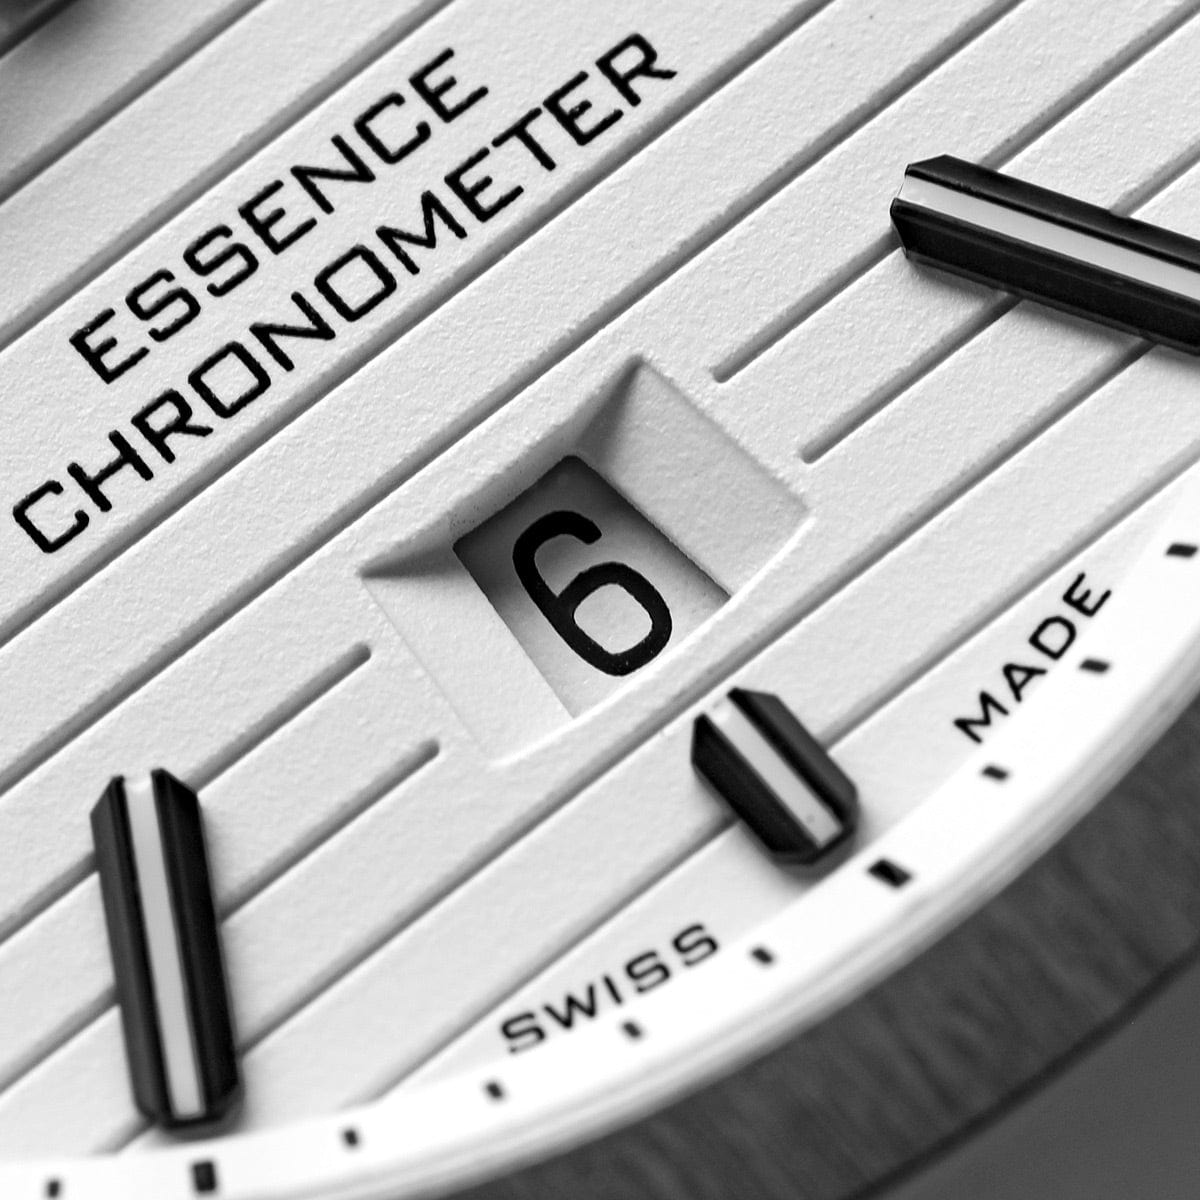 Formex Essence 43 Automatic Chronometer - White 